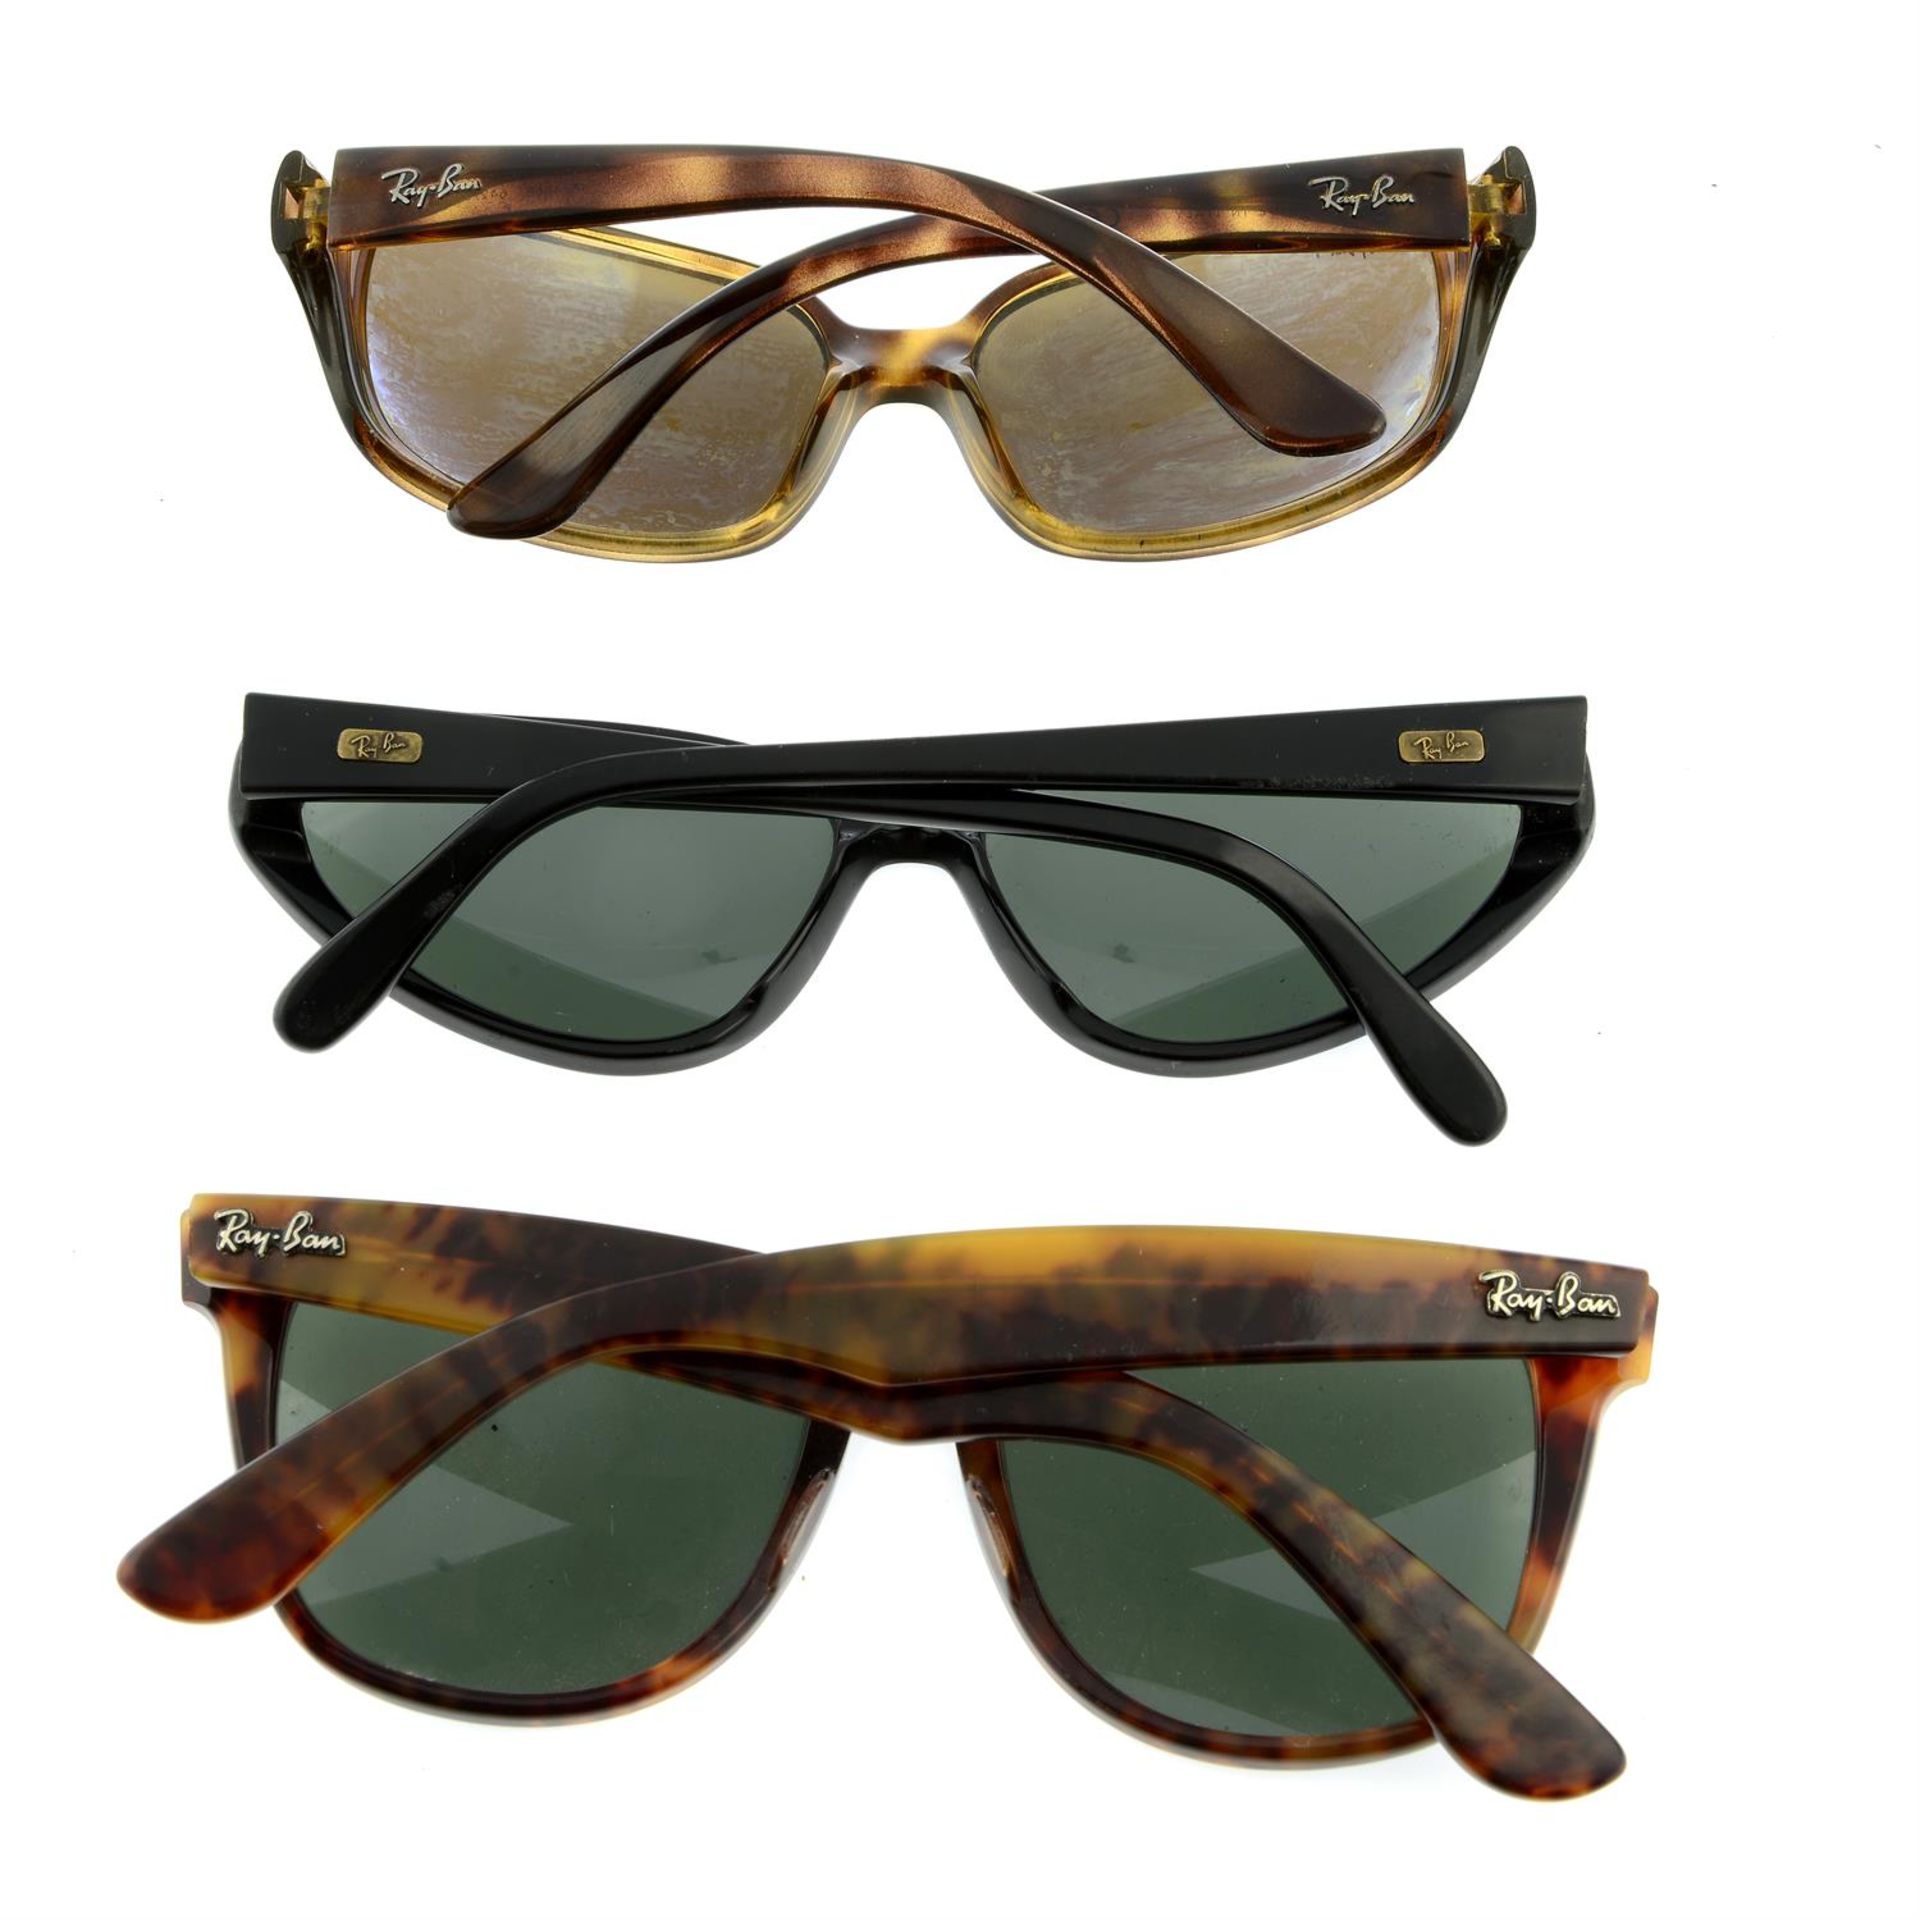 RAY BAN - three pairs of sunglasses. - Image 2 of 3